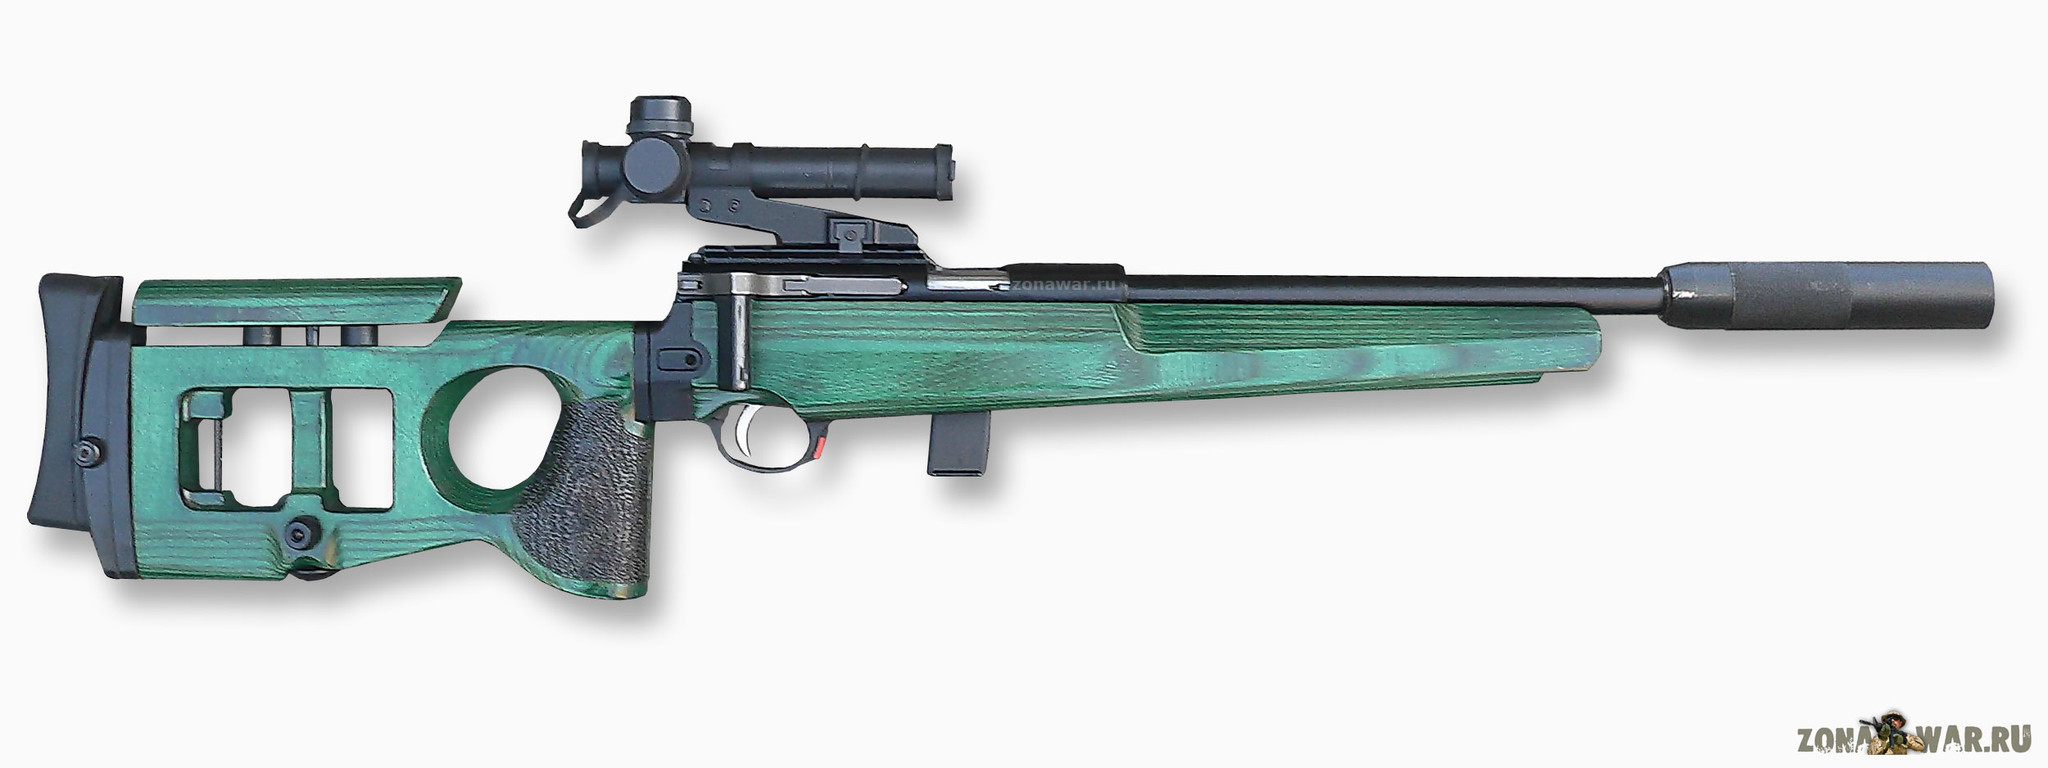 SV-99 sniper rifle